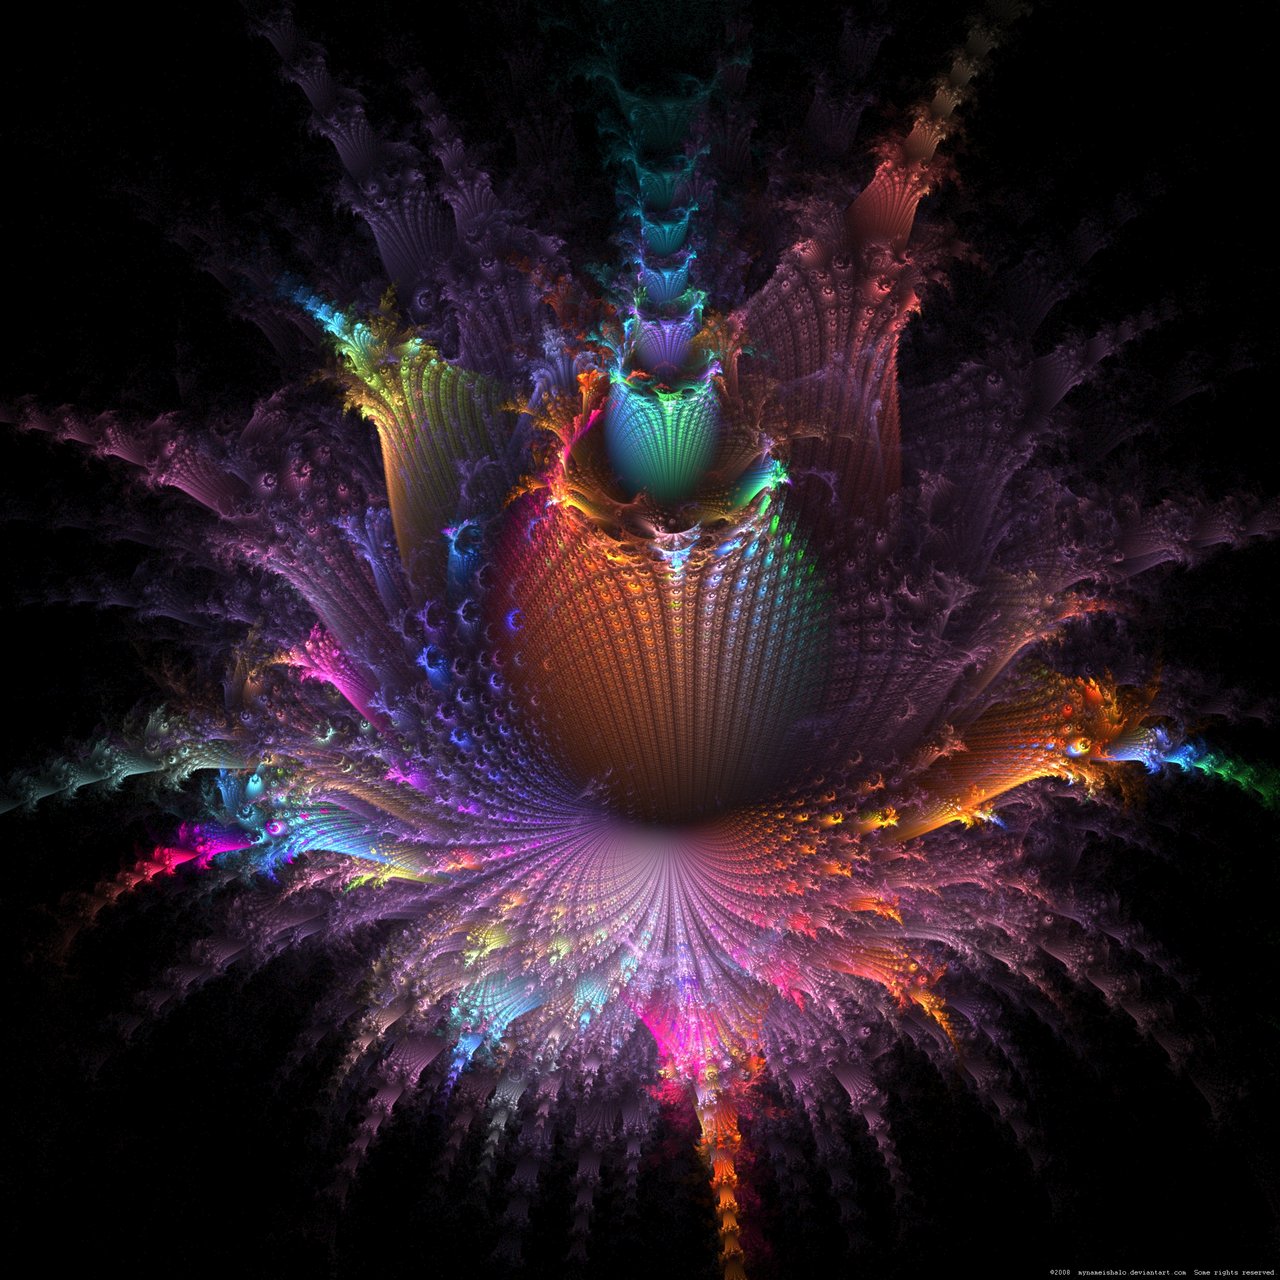 Did ya hear what I just heard?: making trippy fractal art